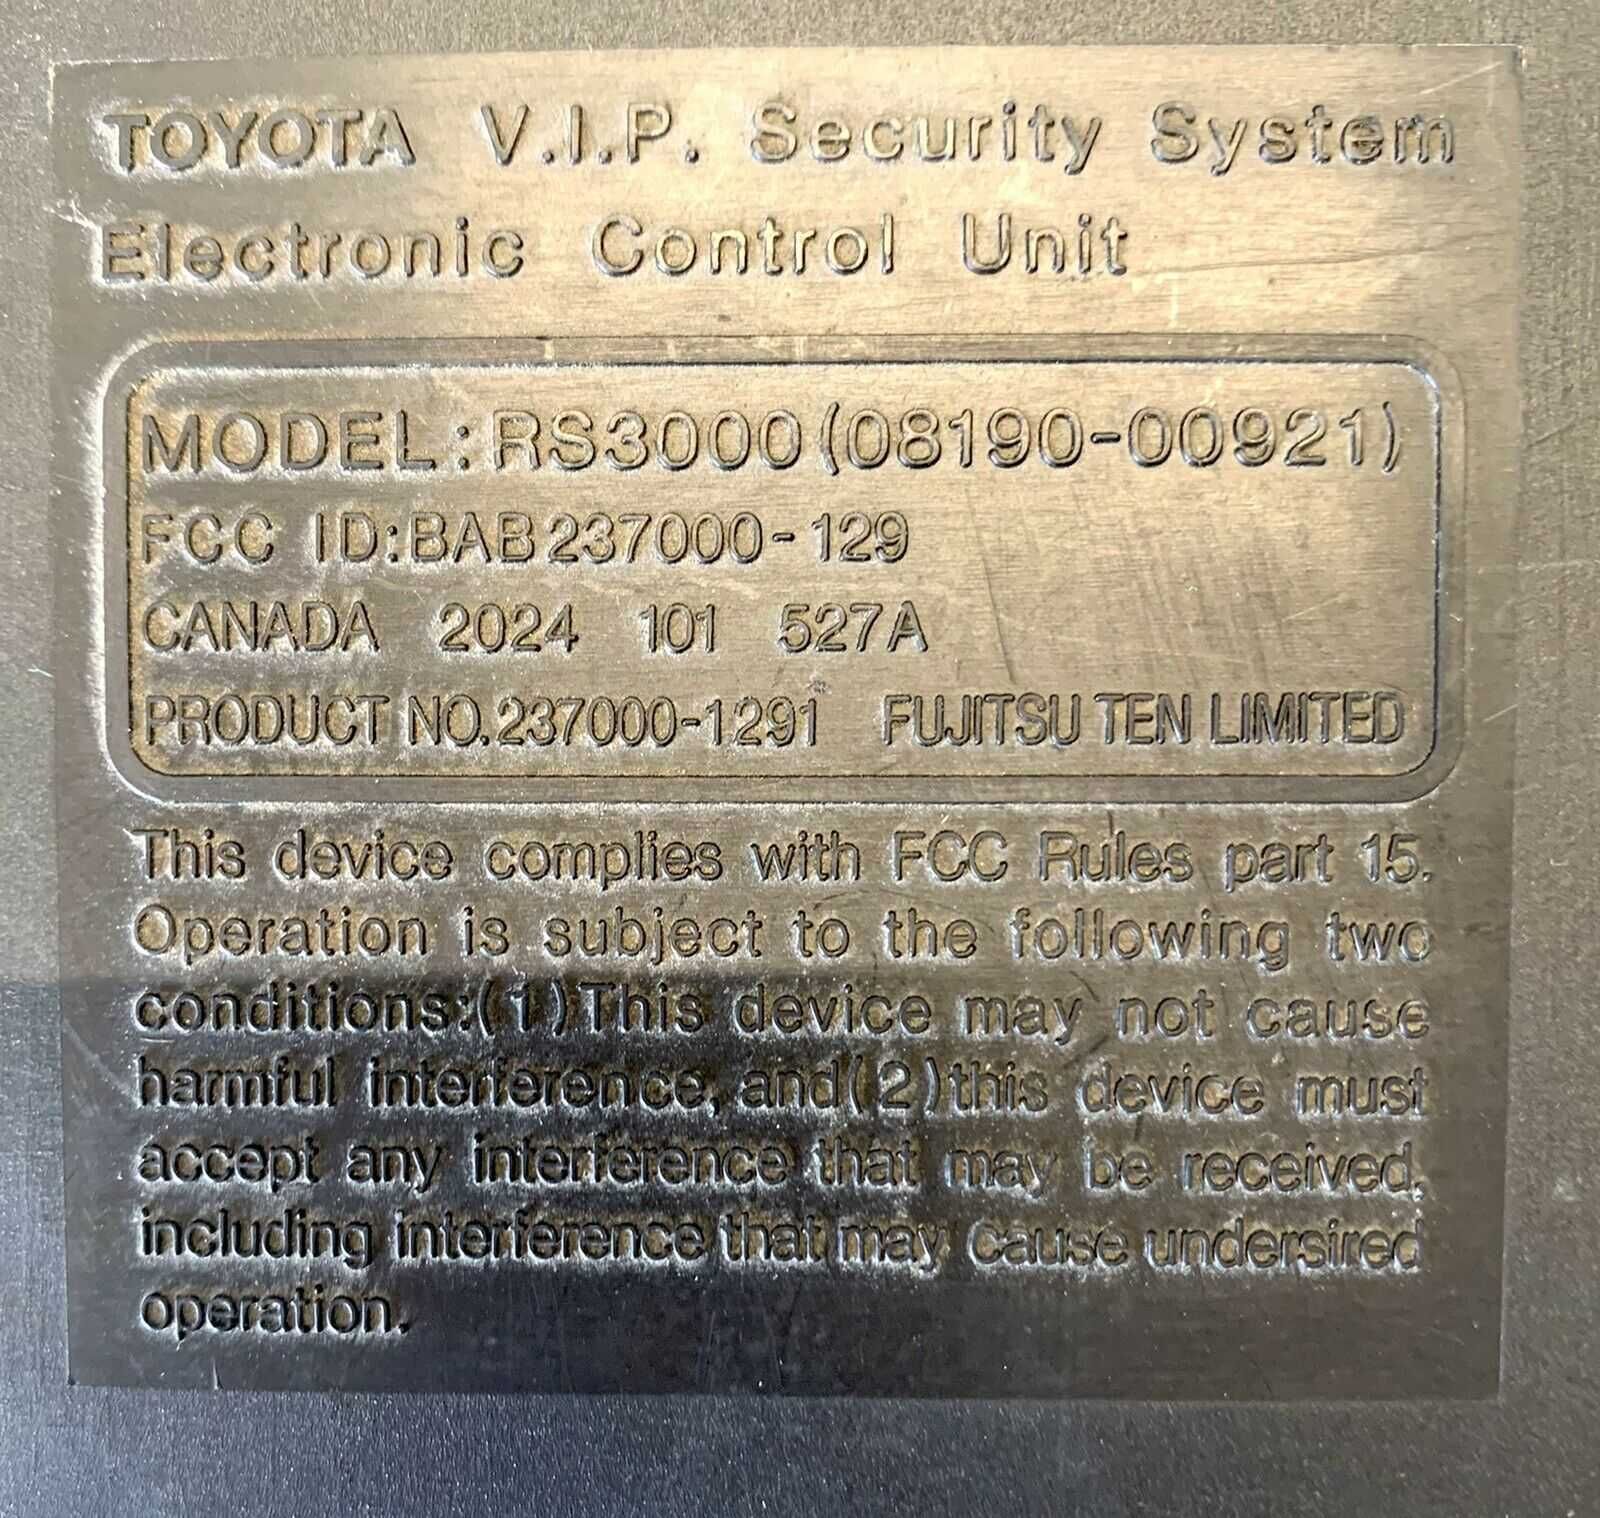 ЭБУ системой безопасности RS3000 на Toyota или обмен на Blu-ray проиг